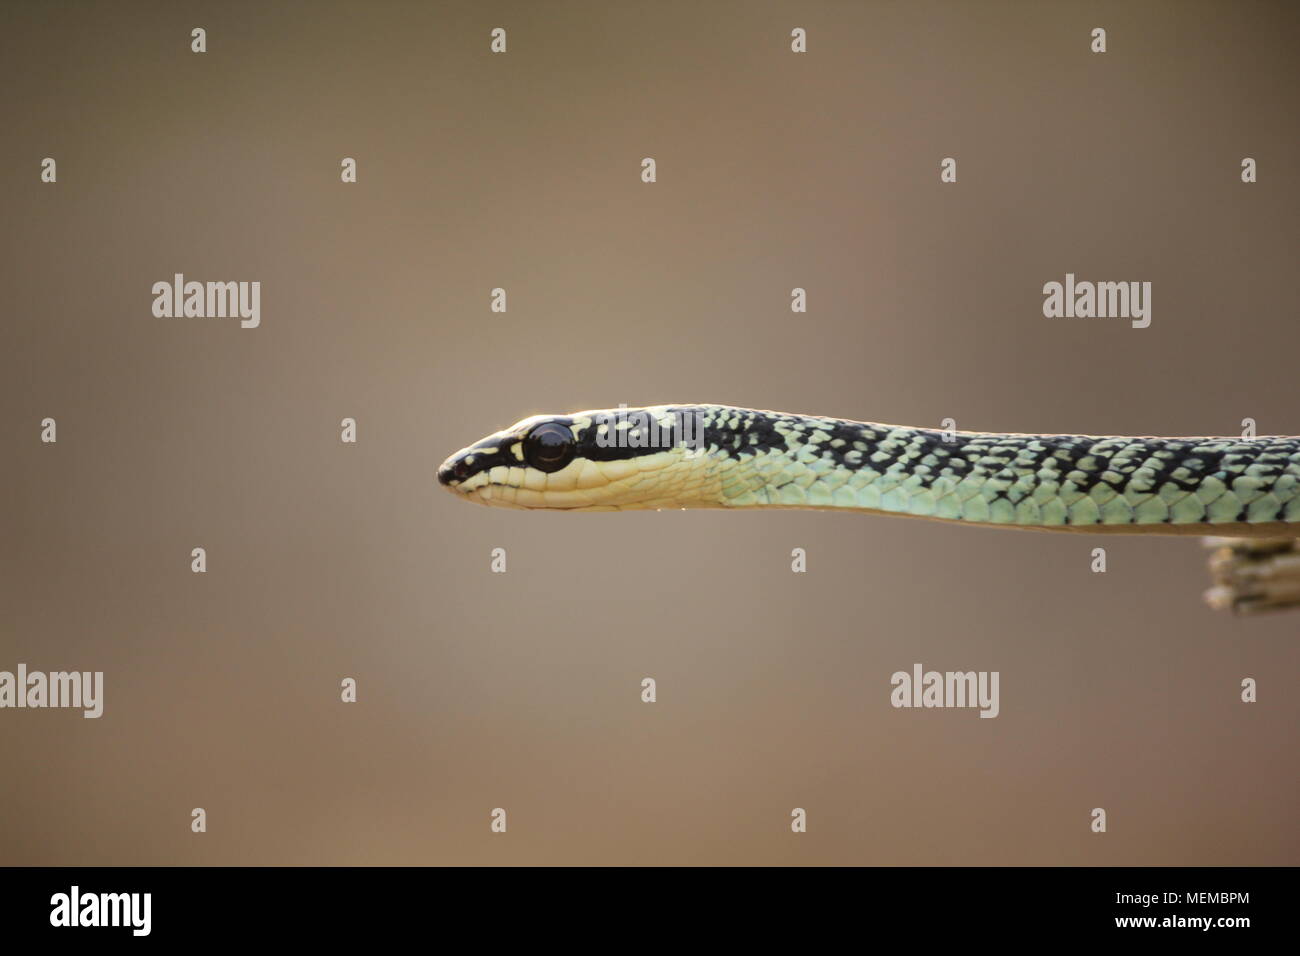 Flying serpent avec fond brun Banque D'Images